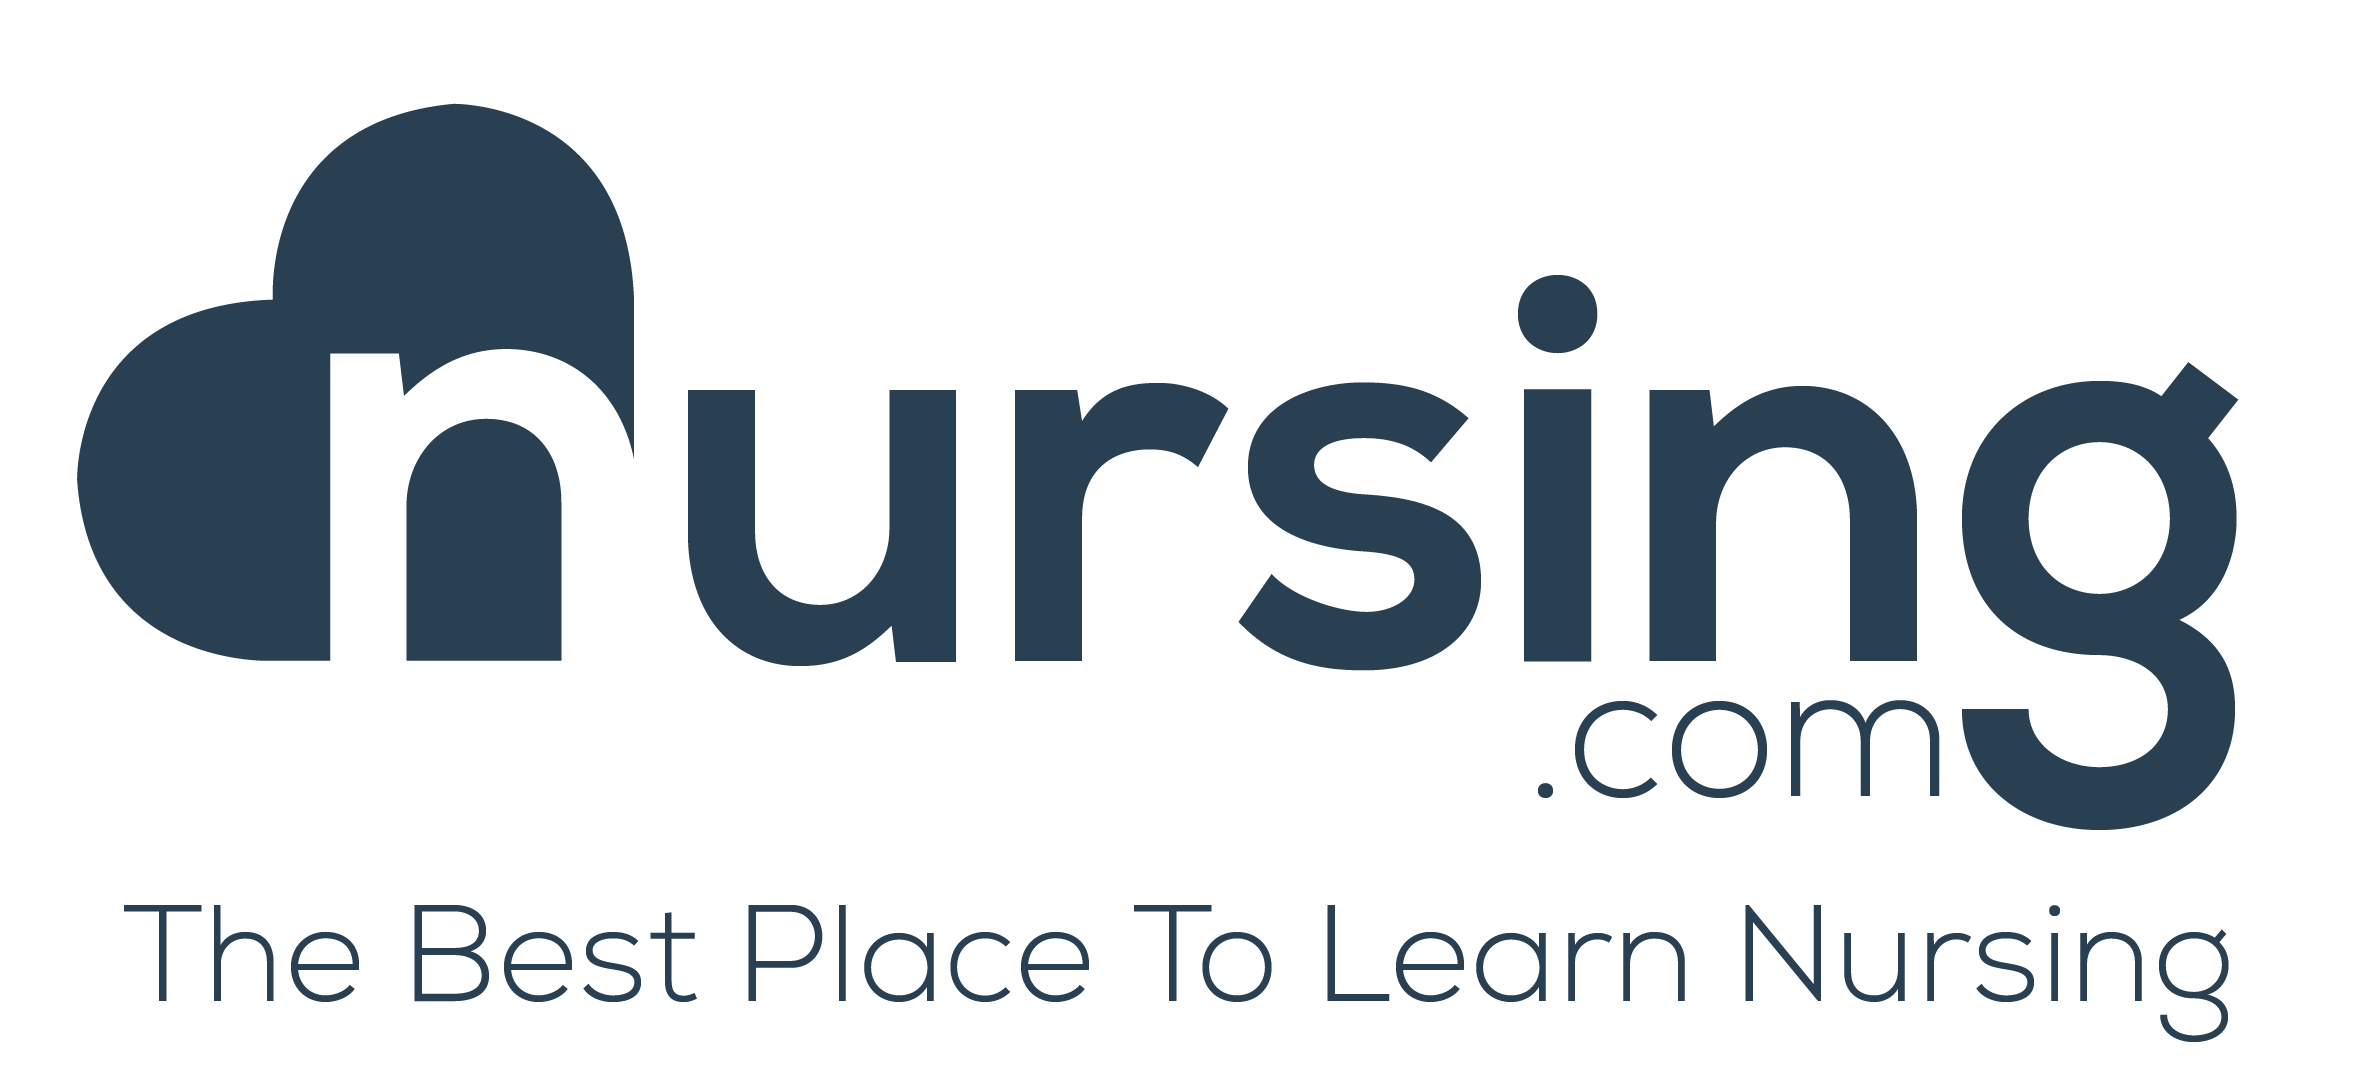 nursing.com logo-best place-no gradient